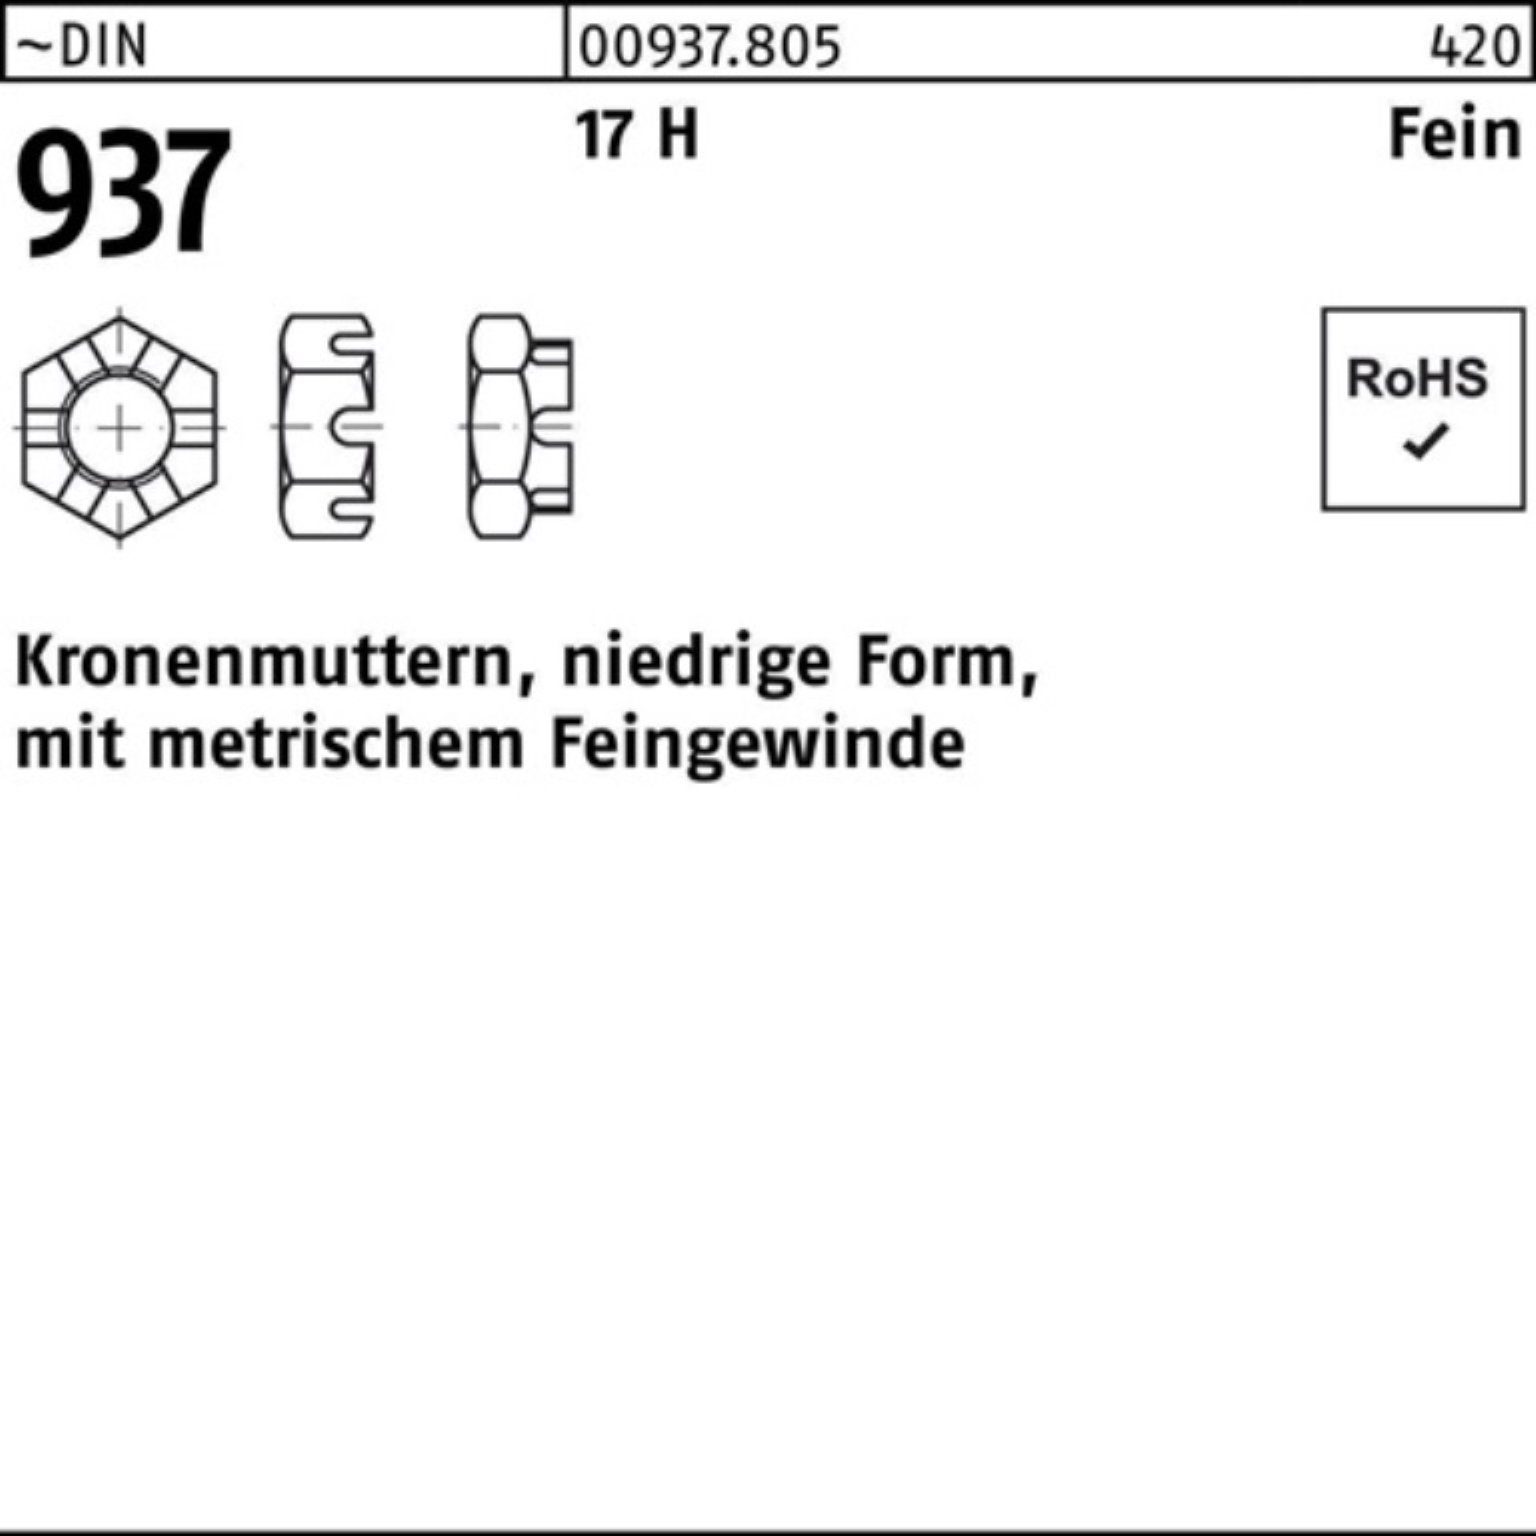 Reyher Kronenmutter 100er Pack Kronenmutter DIN 937 niedrige FormM27x 2 17 H Feingew. 25 S